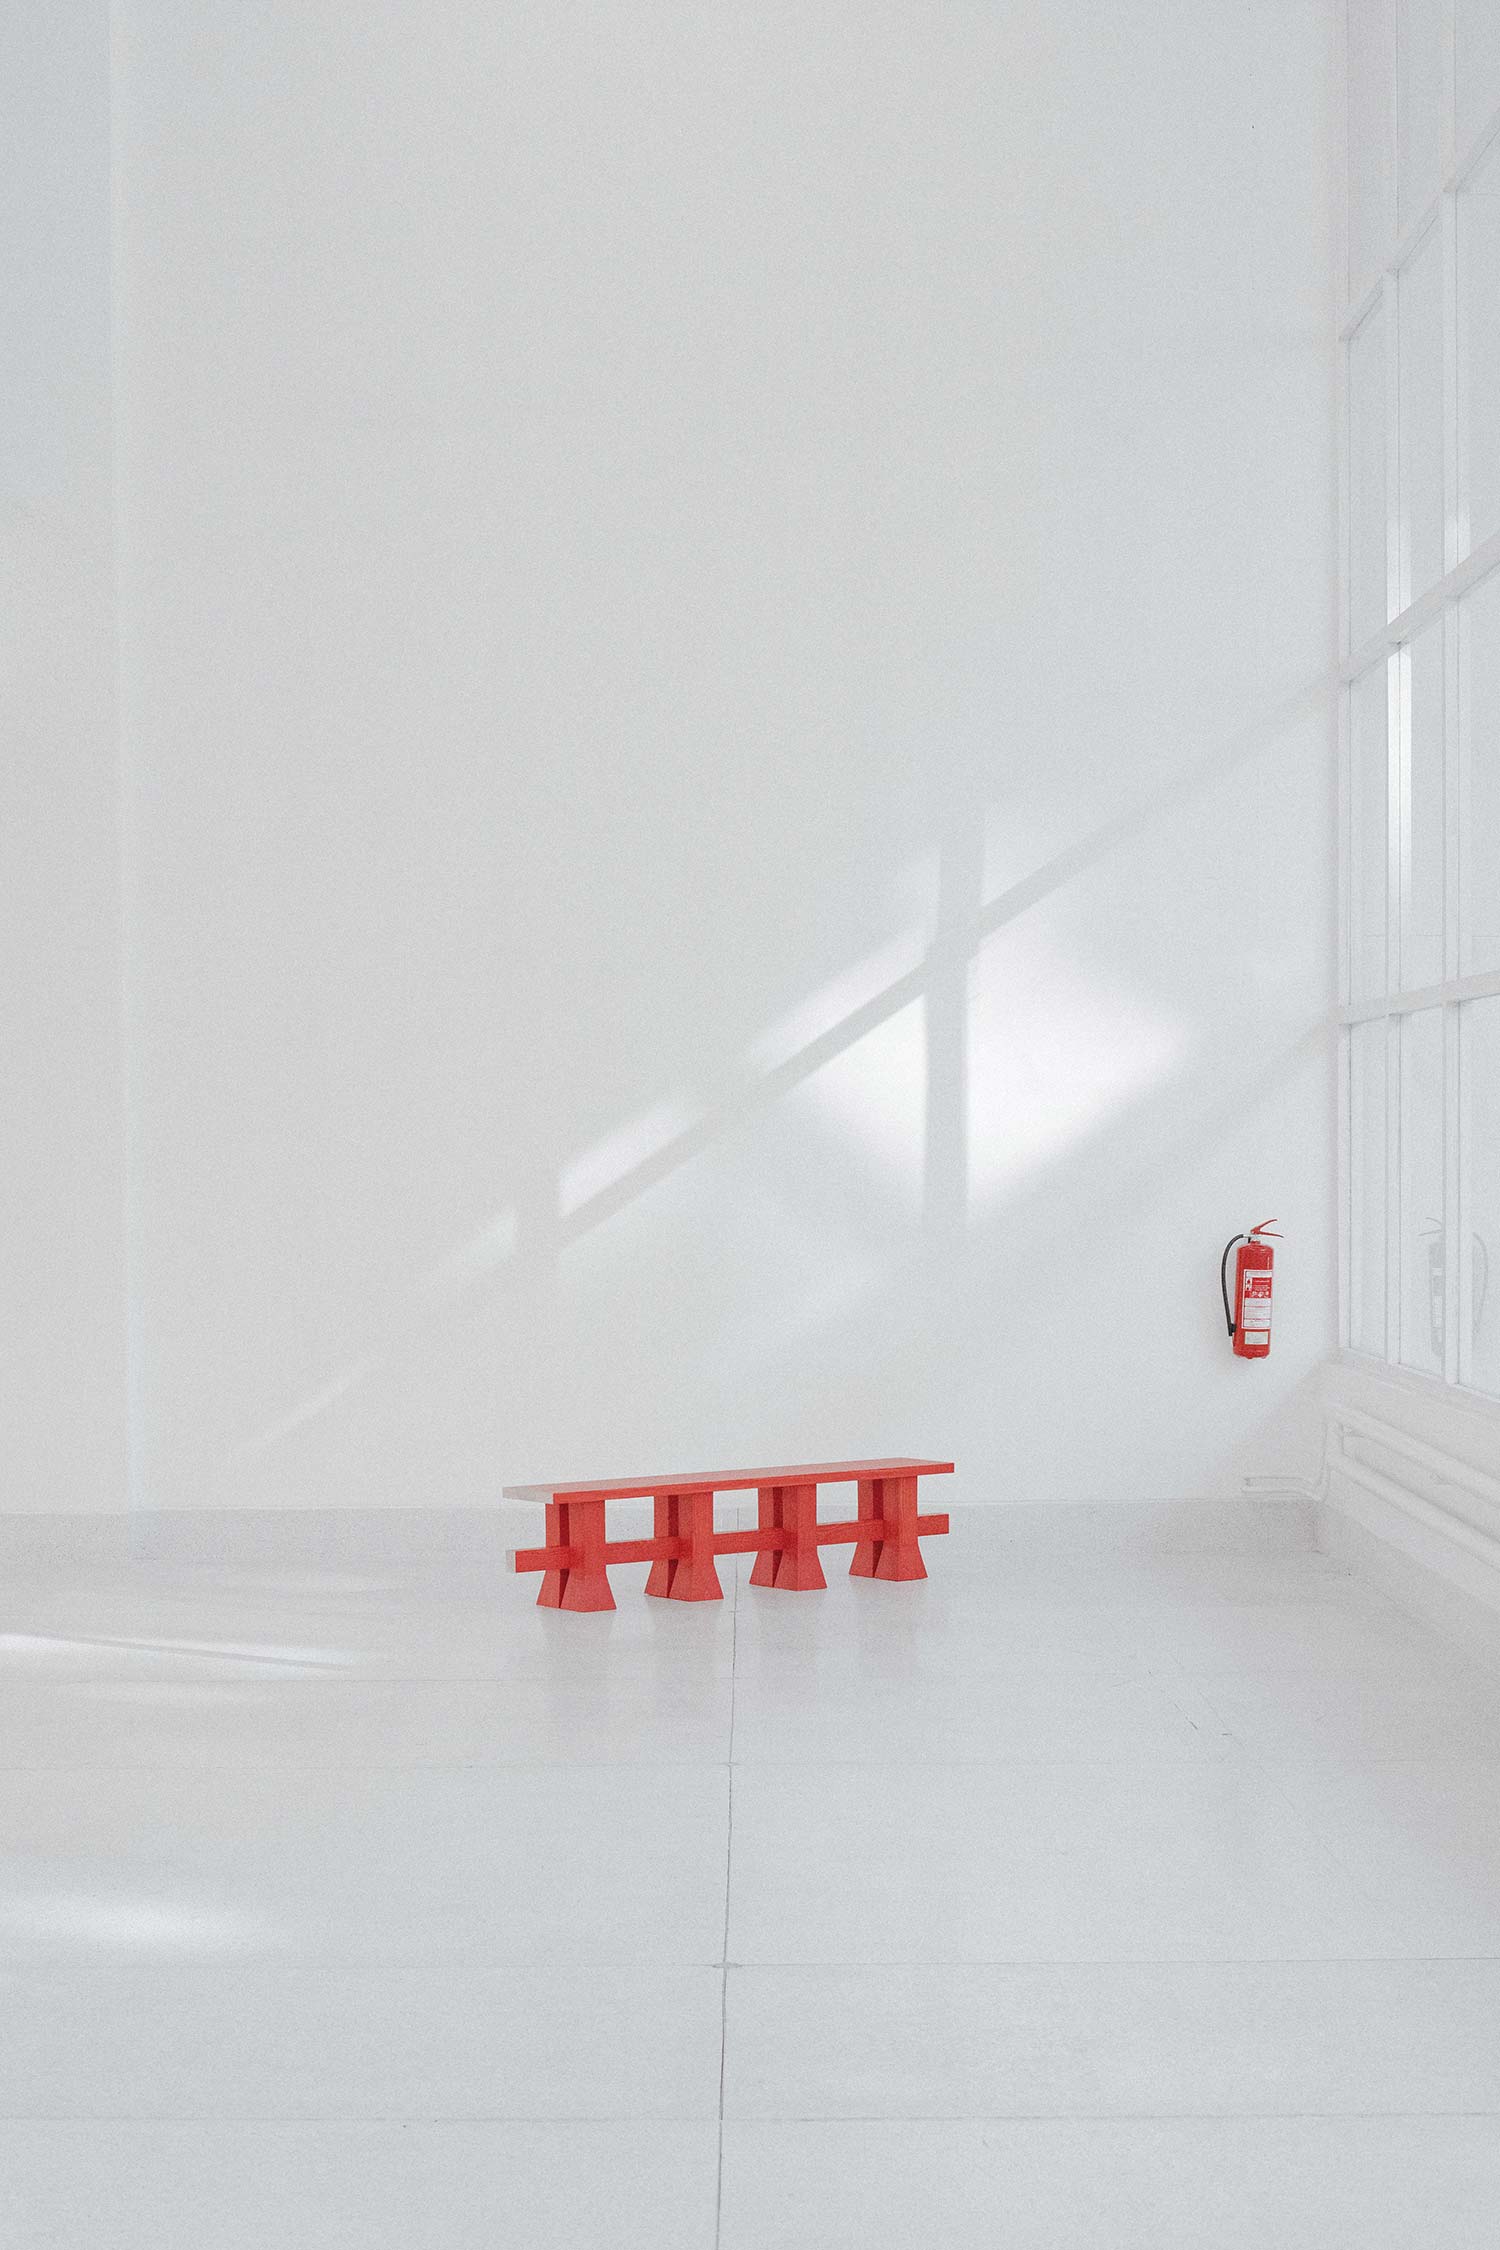 Arnaud-red-wooden-bench-by-Jiri-Krejcirik